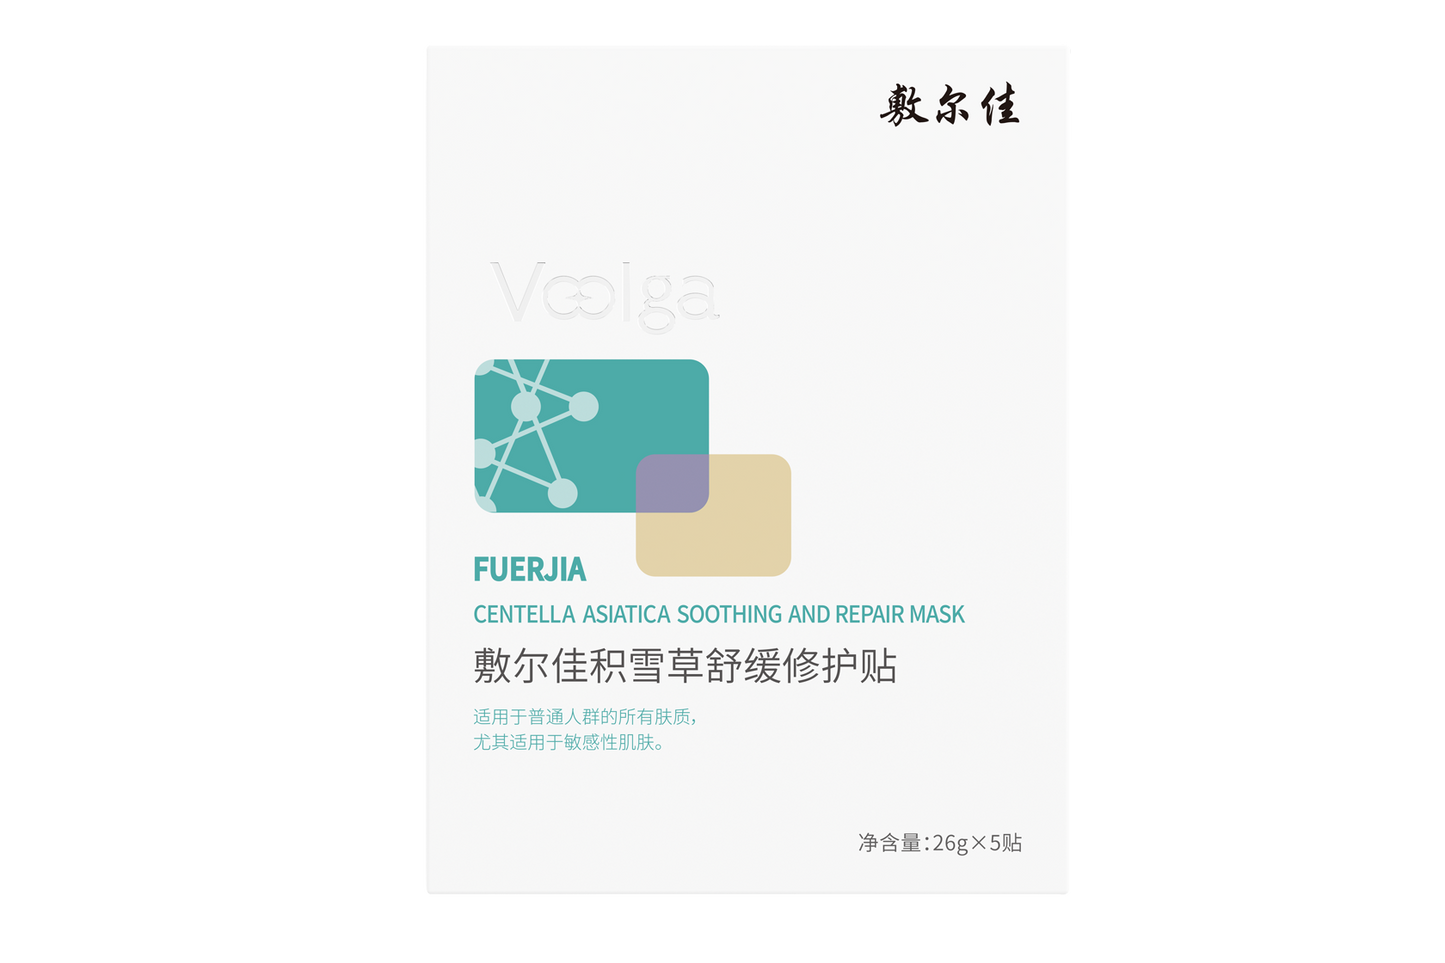 VOOLGA Centella Asiatica Soothing and Repair Mask 5 pcs